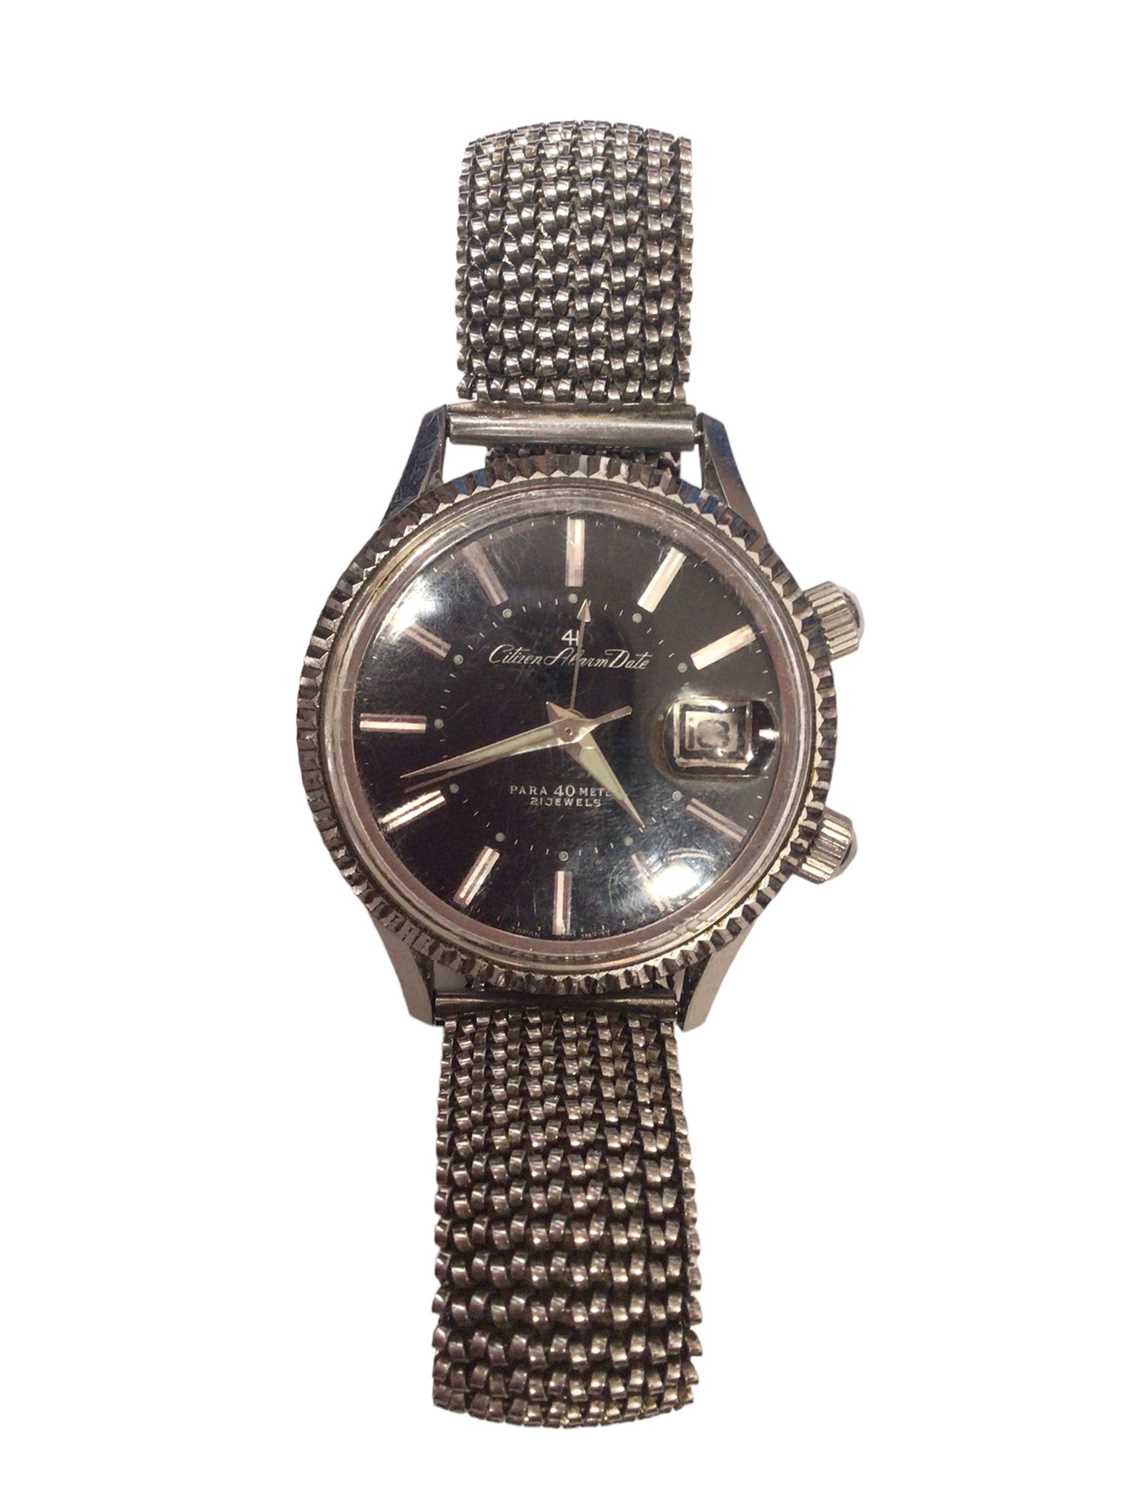 Gentlemen's Citizen Alarm Date stainless steel wristwatch - Image 2 of 4